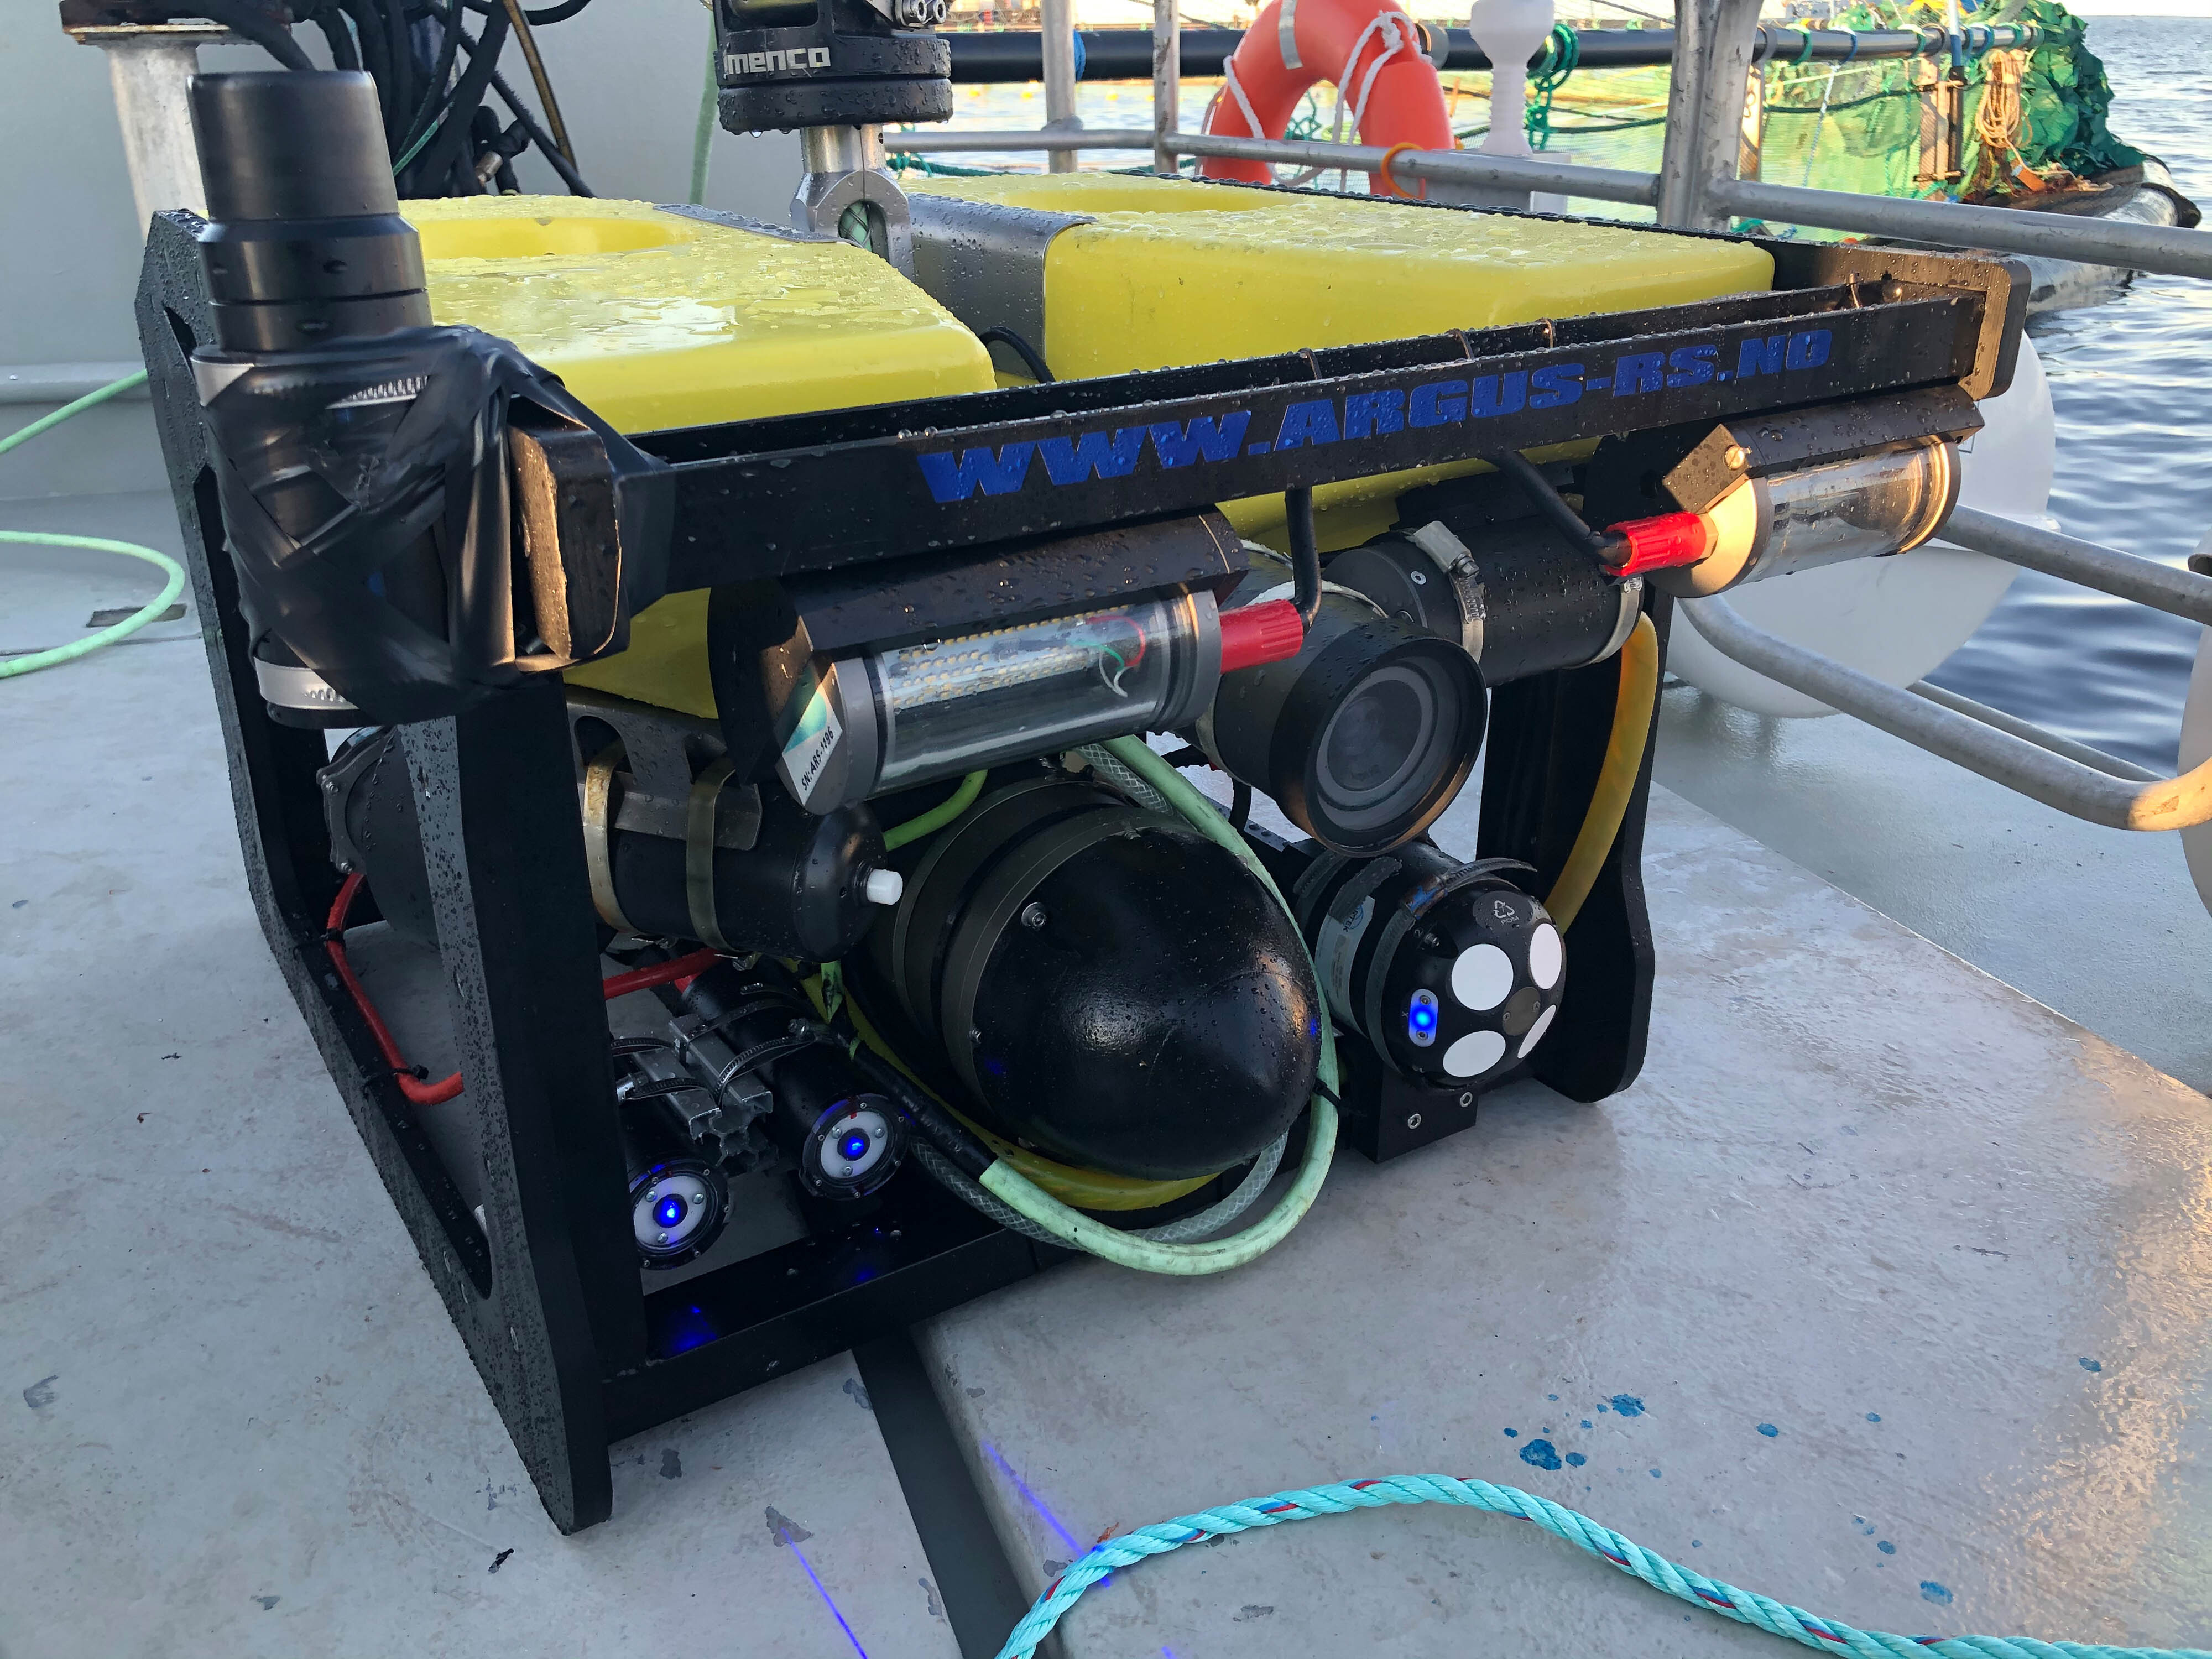 The Nortek DVL1000 installed on the Artifex net inspection ROV. Courtesy of SINTEF Ocean AS.